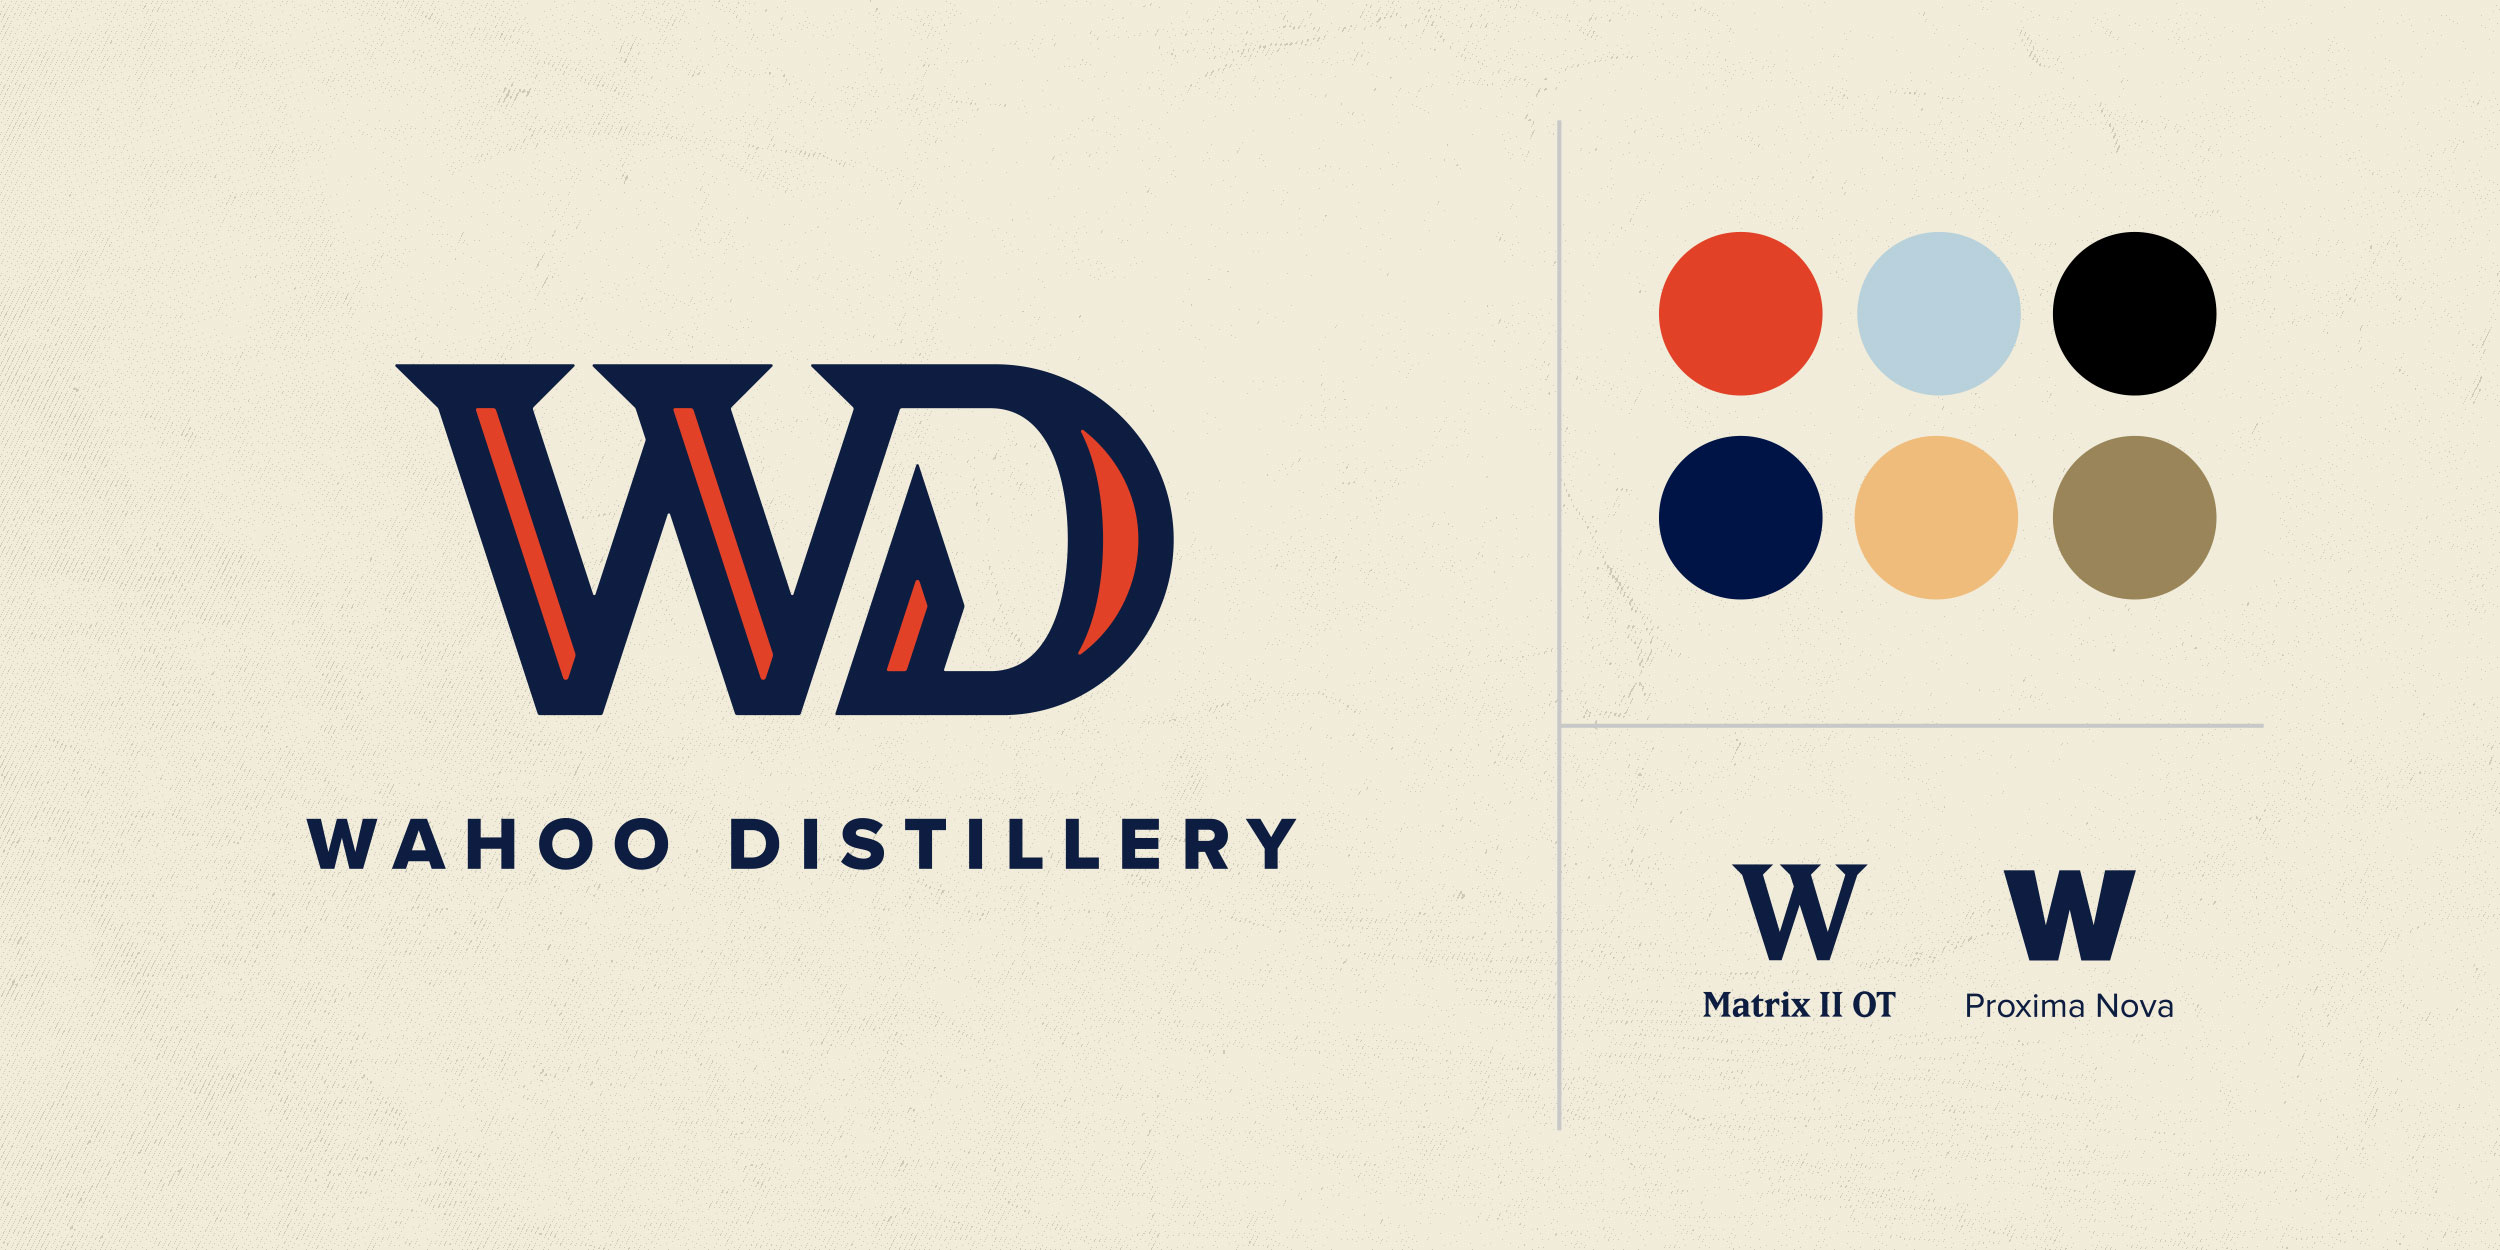 Wahoo Distillery bottle and identity